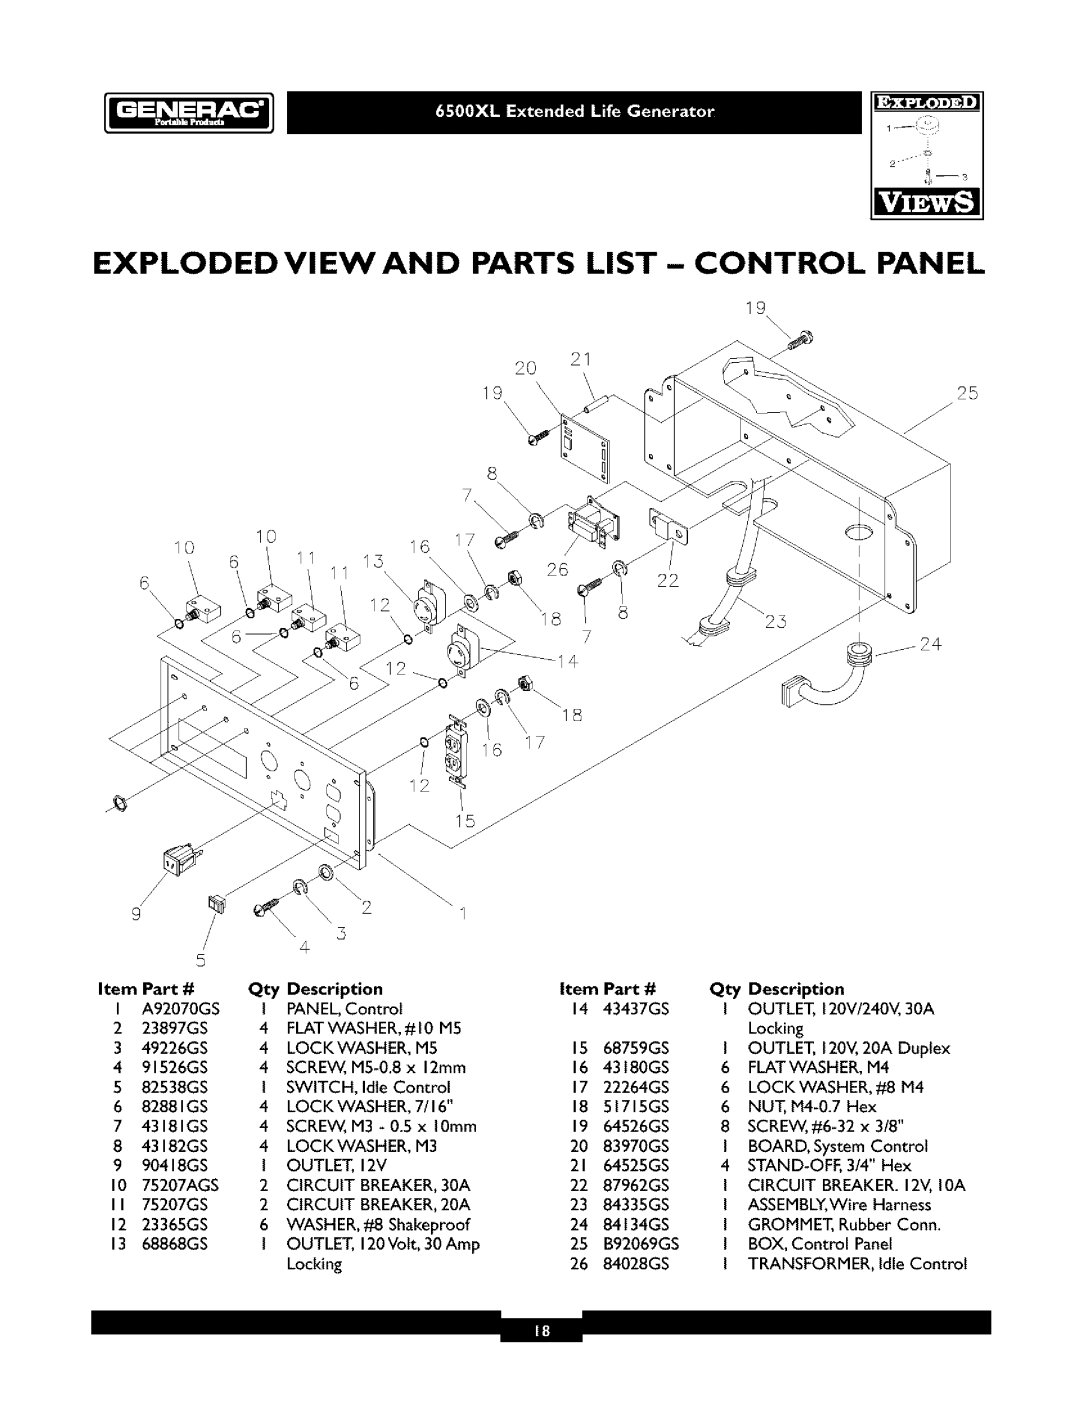 Generac 6500XL Exploded View And Parts List - Control Panel, Description, FLATWASHER,#10 M5, SCREW, M5-0.8 x 12mm 